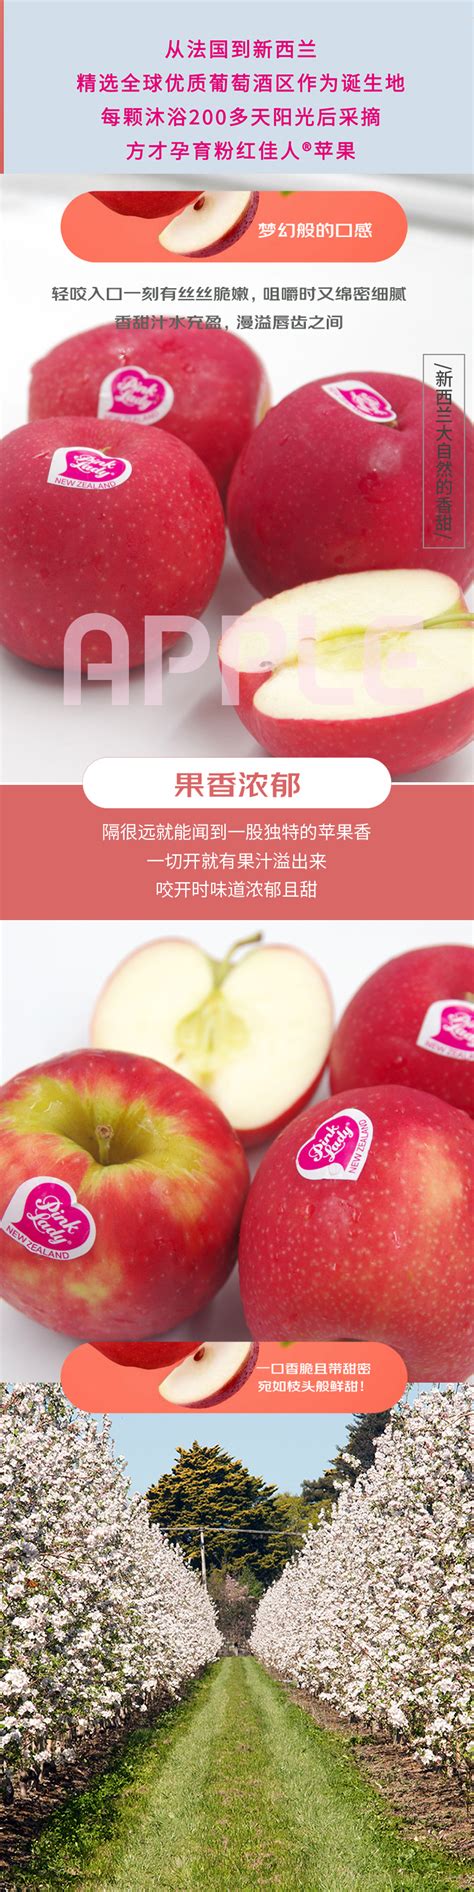 pink lady苹果价格贵吗